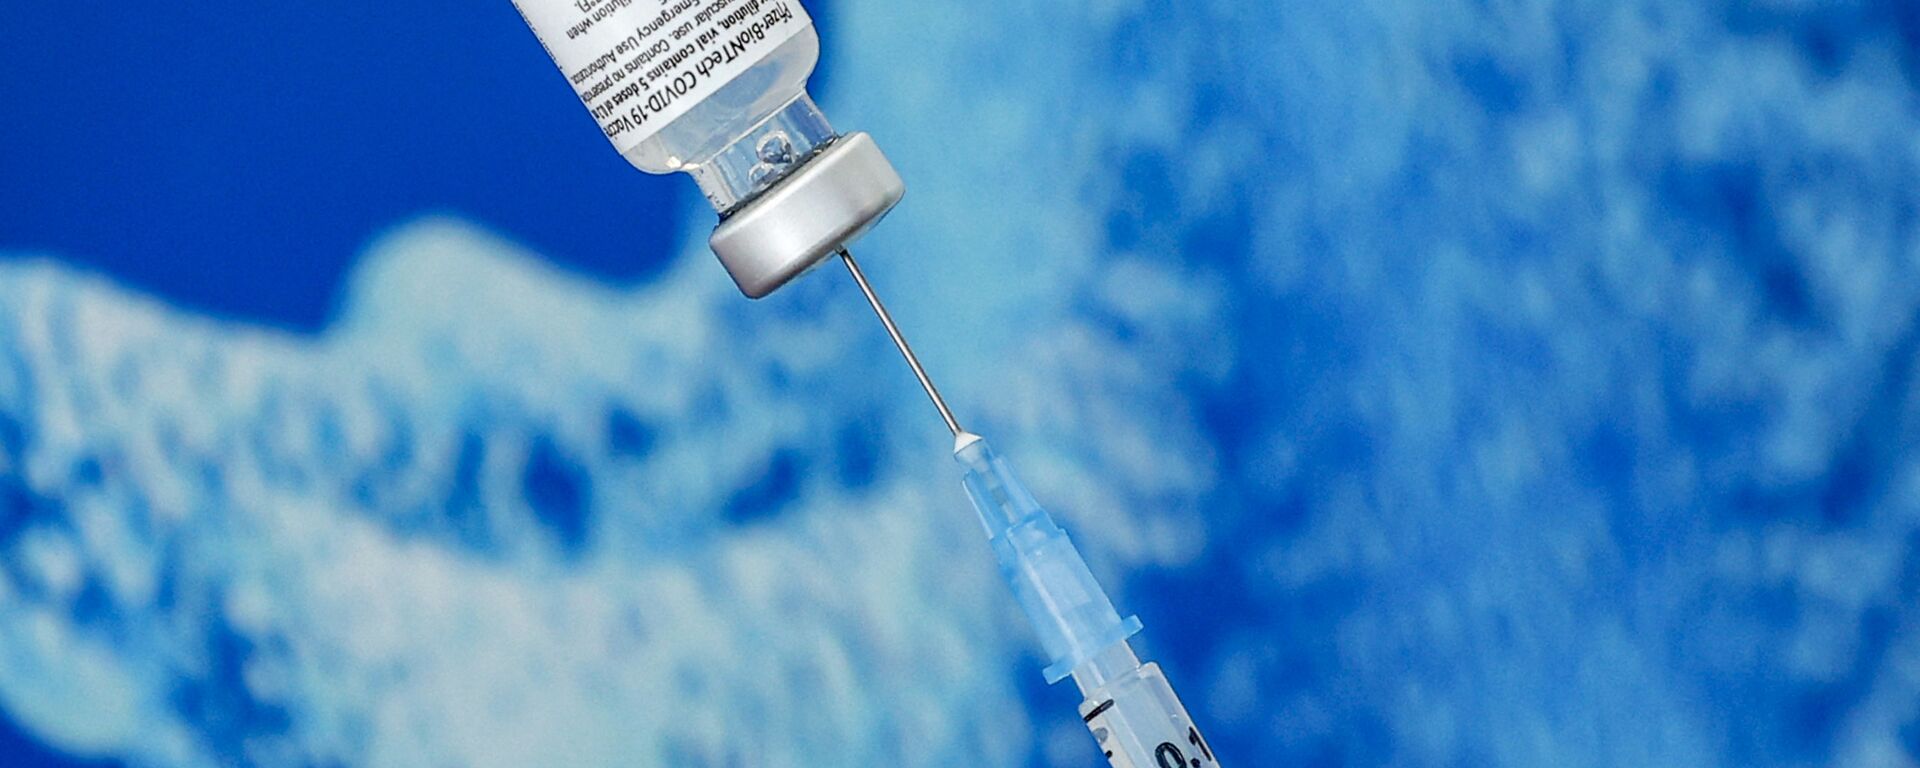 A health worker prepares a dose of the Pfizer-BioNtech COVID-19 coronavirus vaccine at Clalit Health Services, in Israel's Mediterranean coastal city of Tel Aviv on January 23, 2021. - Sputnik International, 1920, 28.07.2021